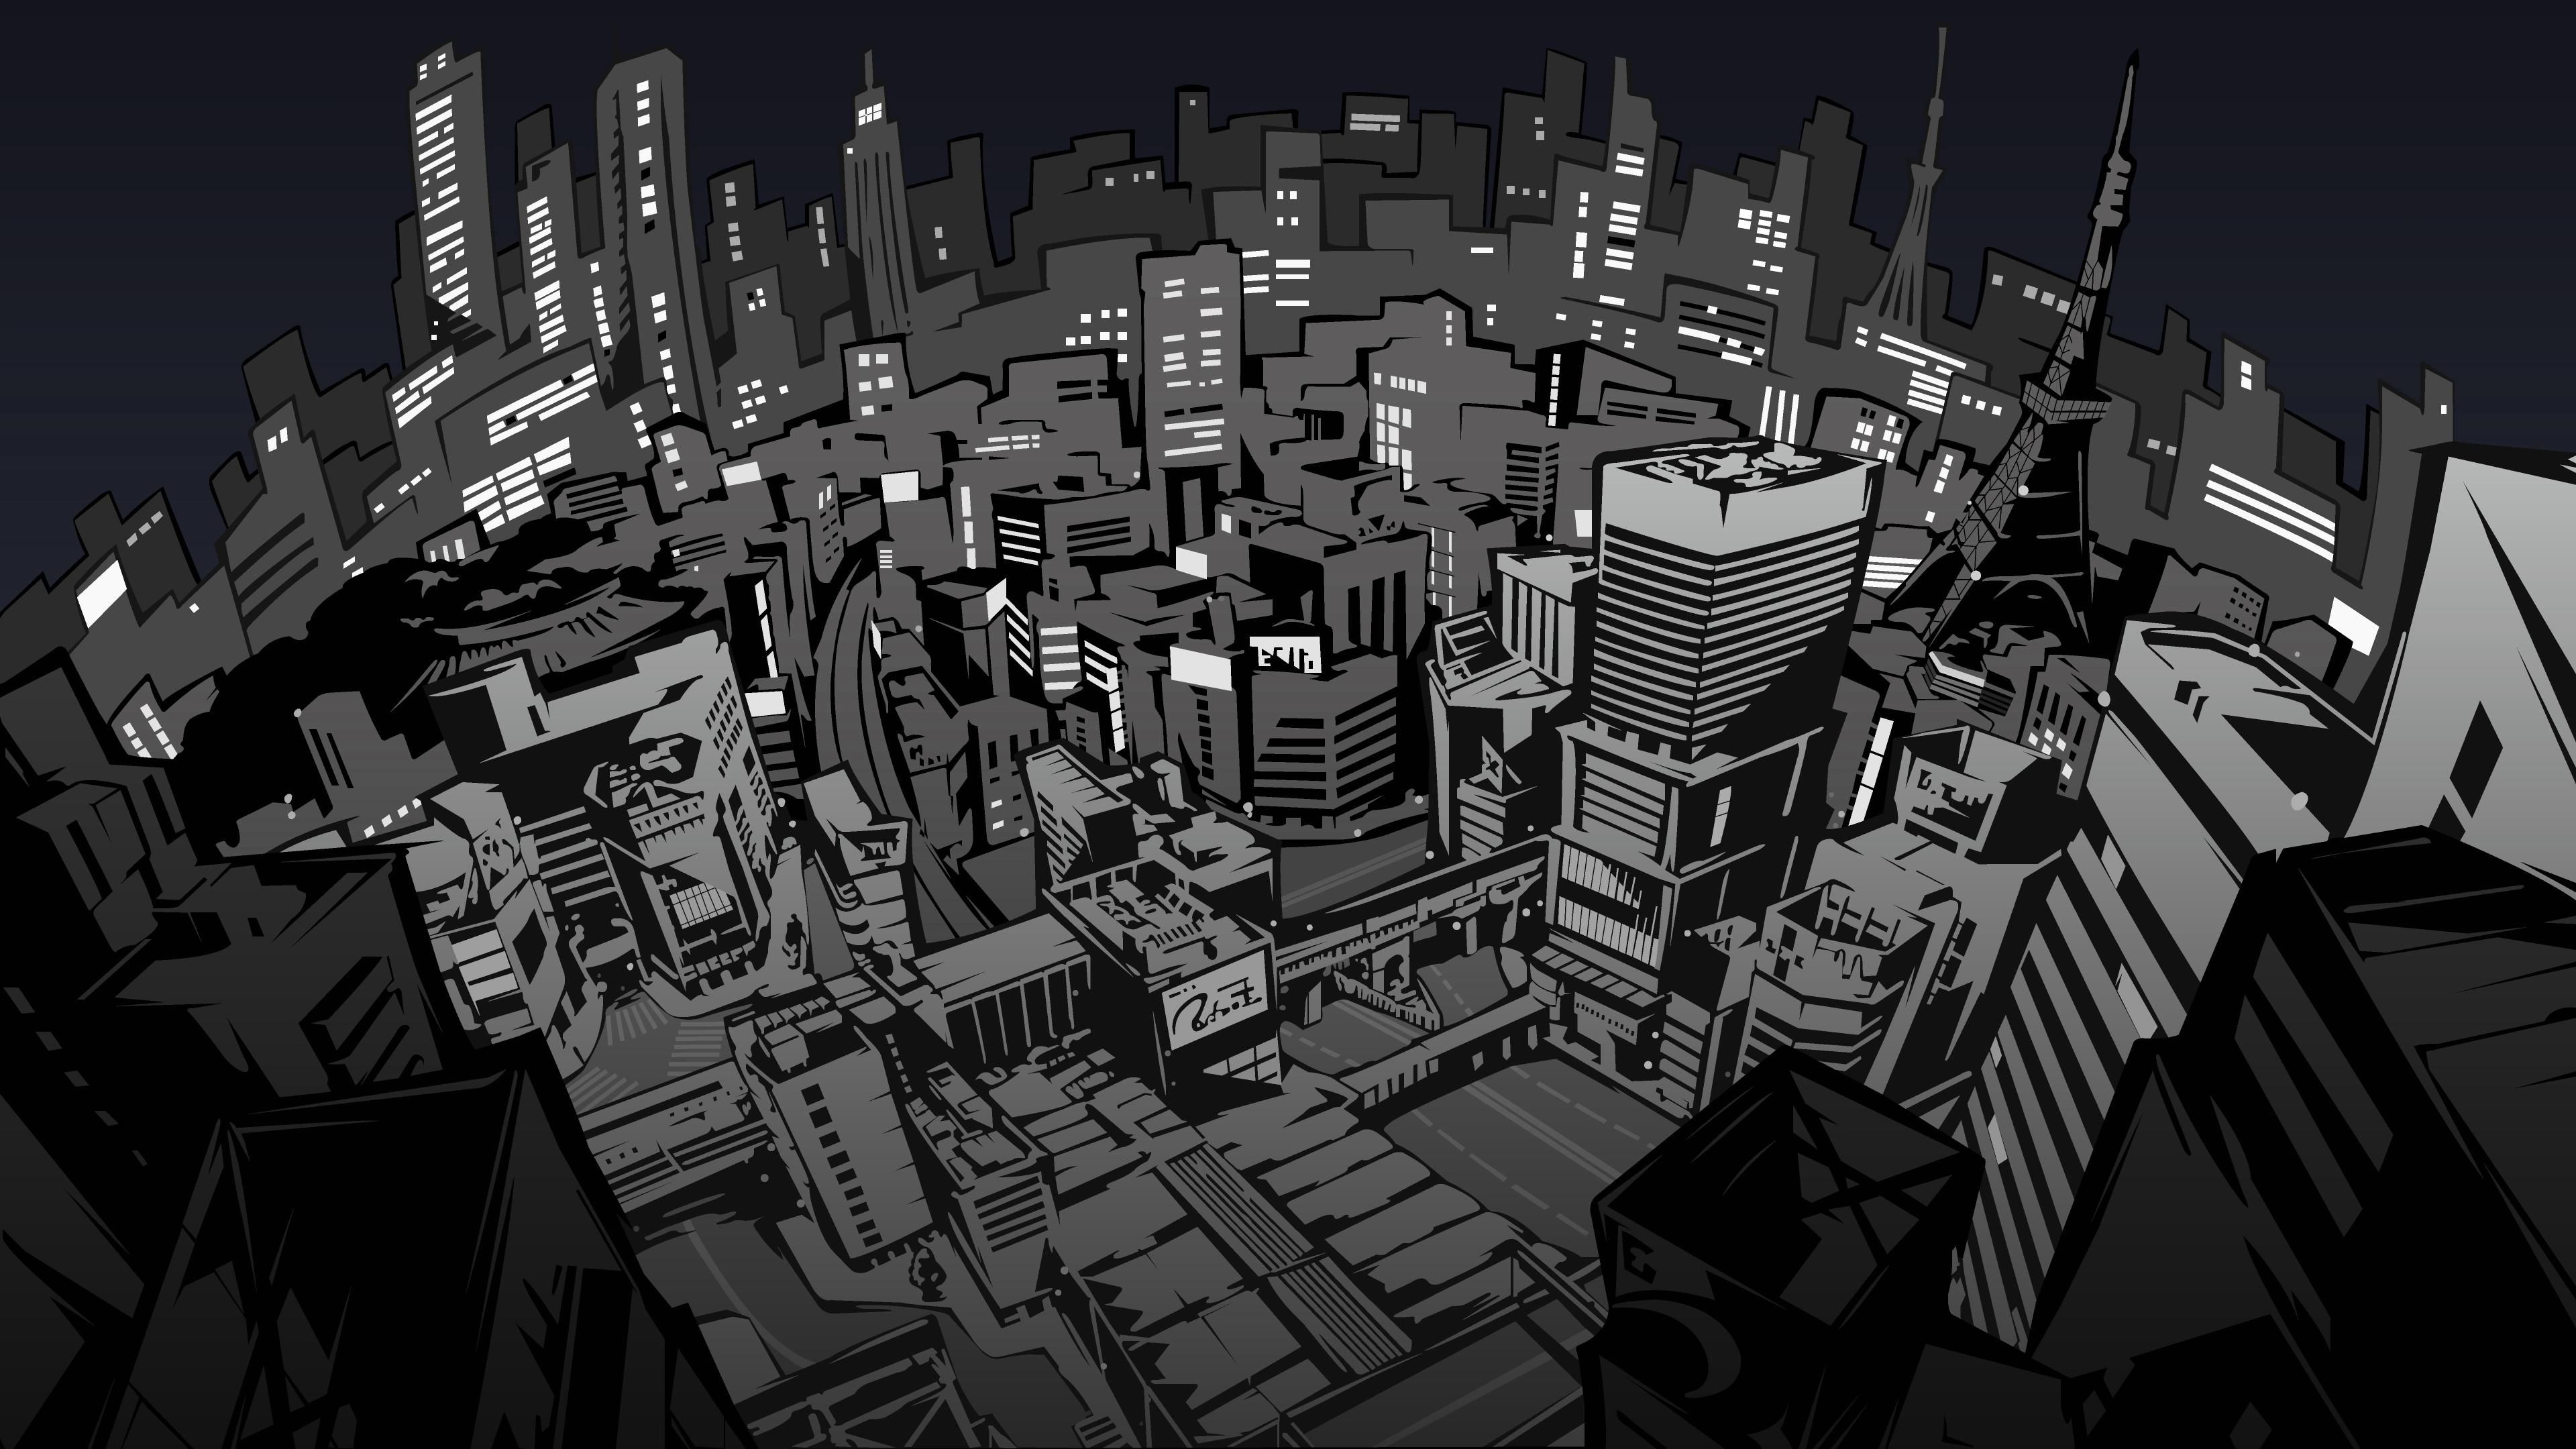 Persona Nighttime Tokyo 4K wallpaper. Persona City illustration, Background